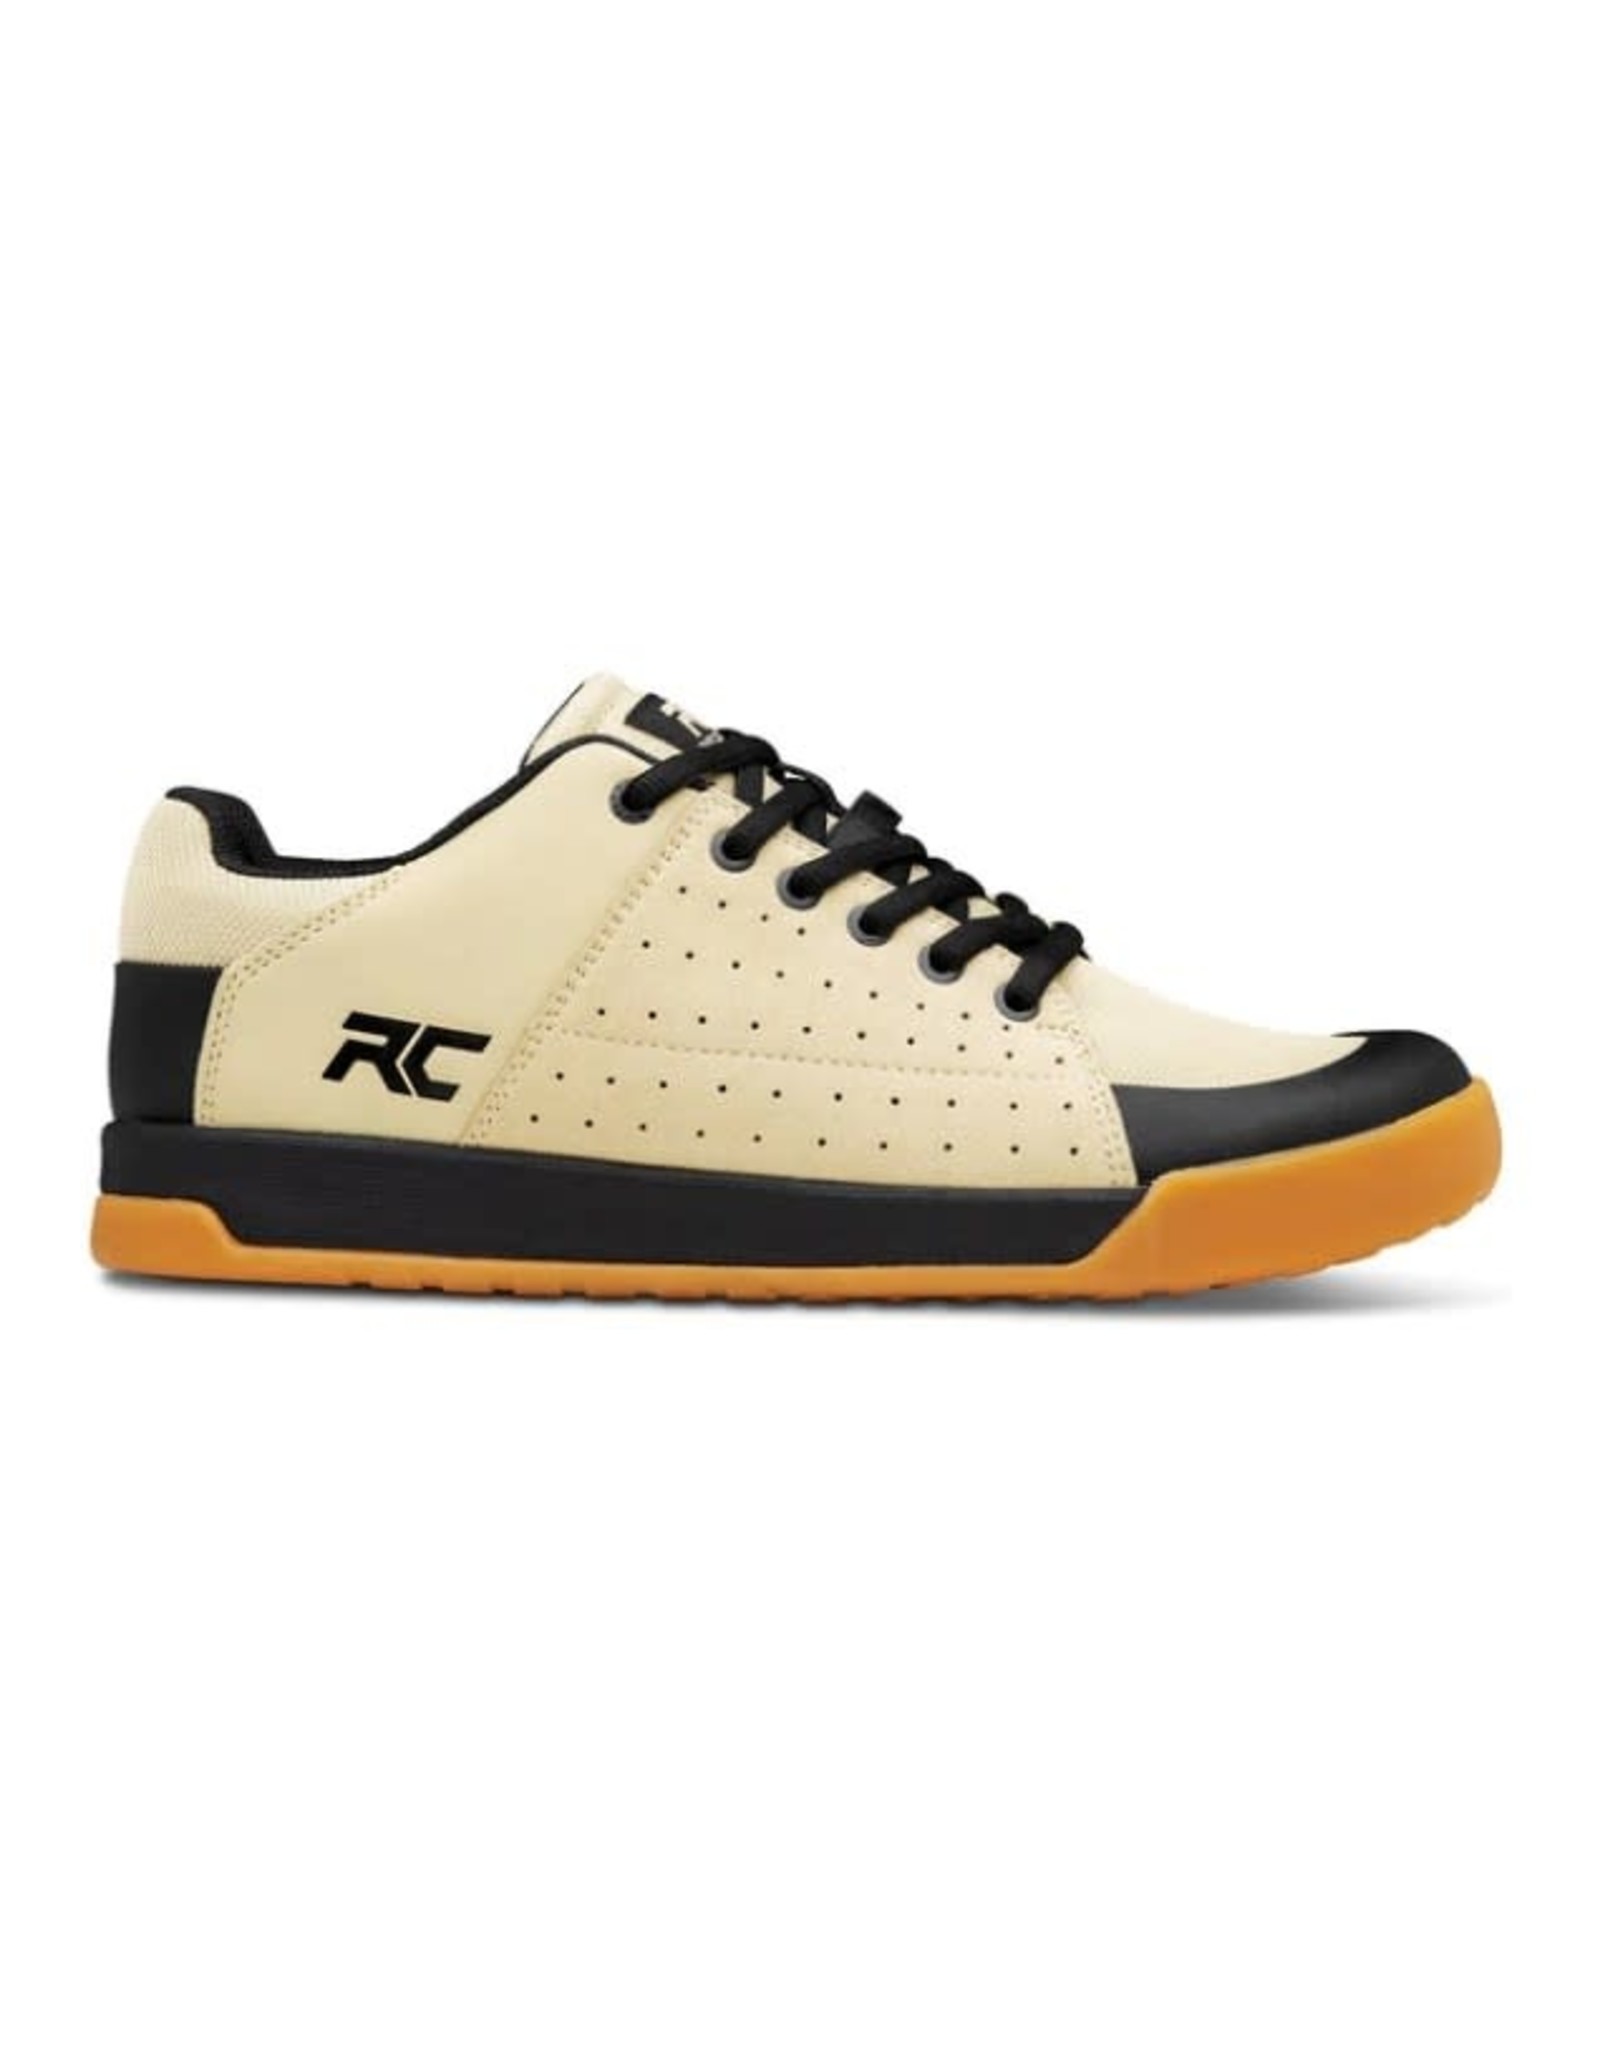 Ride Concepts Shoes RC Livewire mens (new)